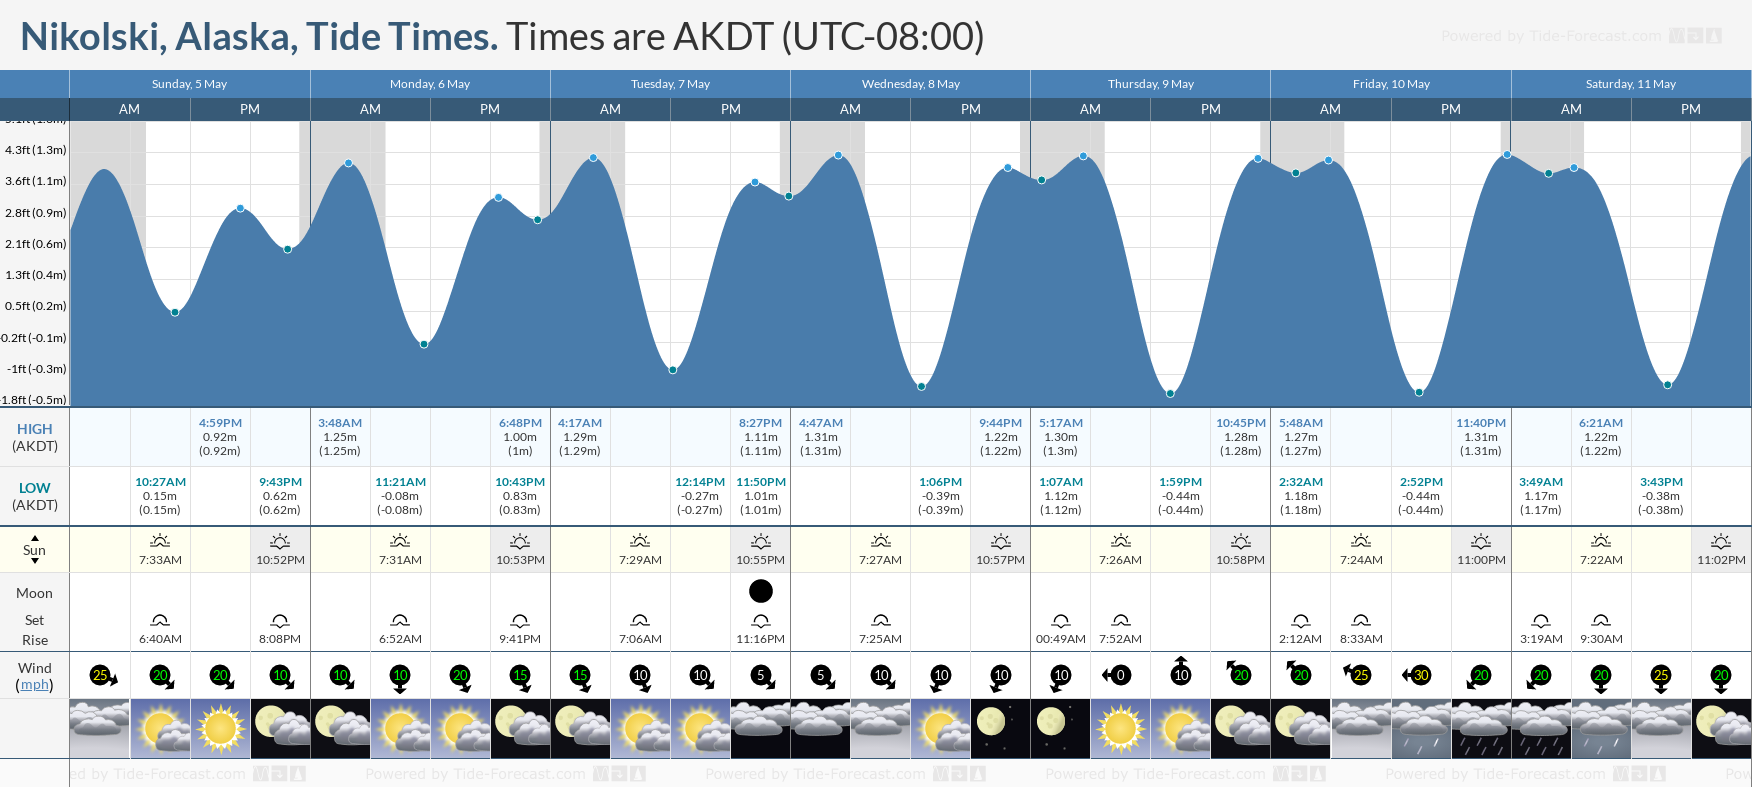 Nikolski, Alaska Tide Chart including high and low tide tide times for the next 7 days